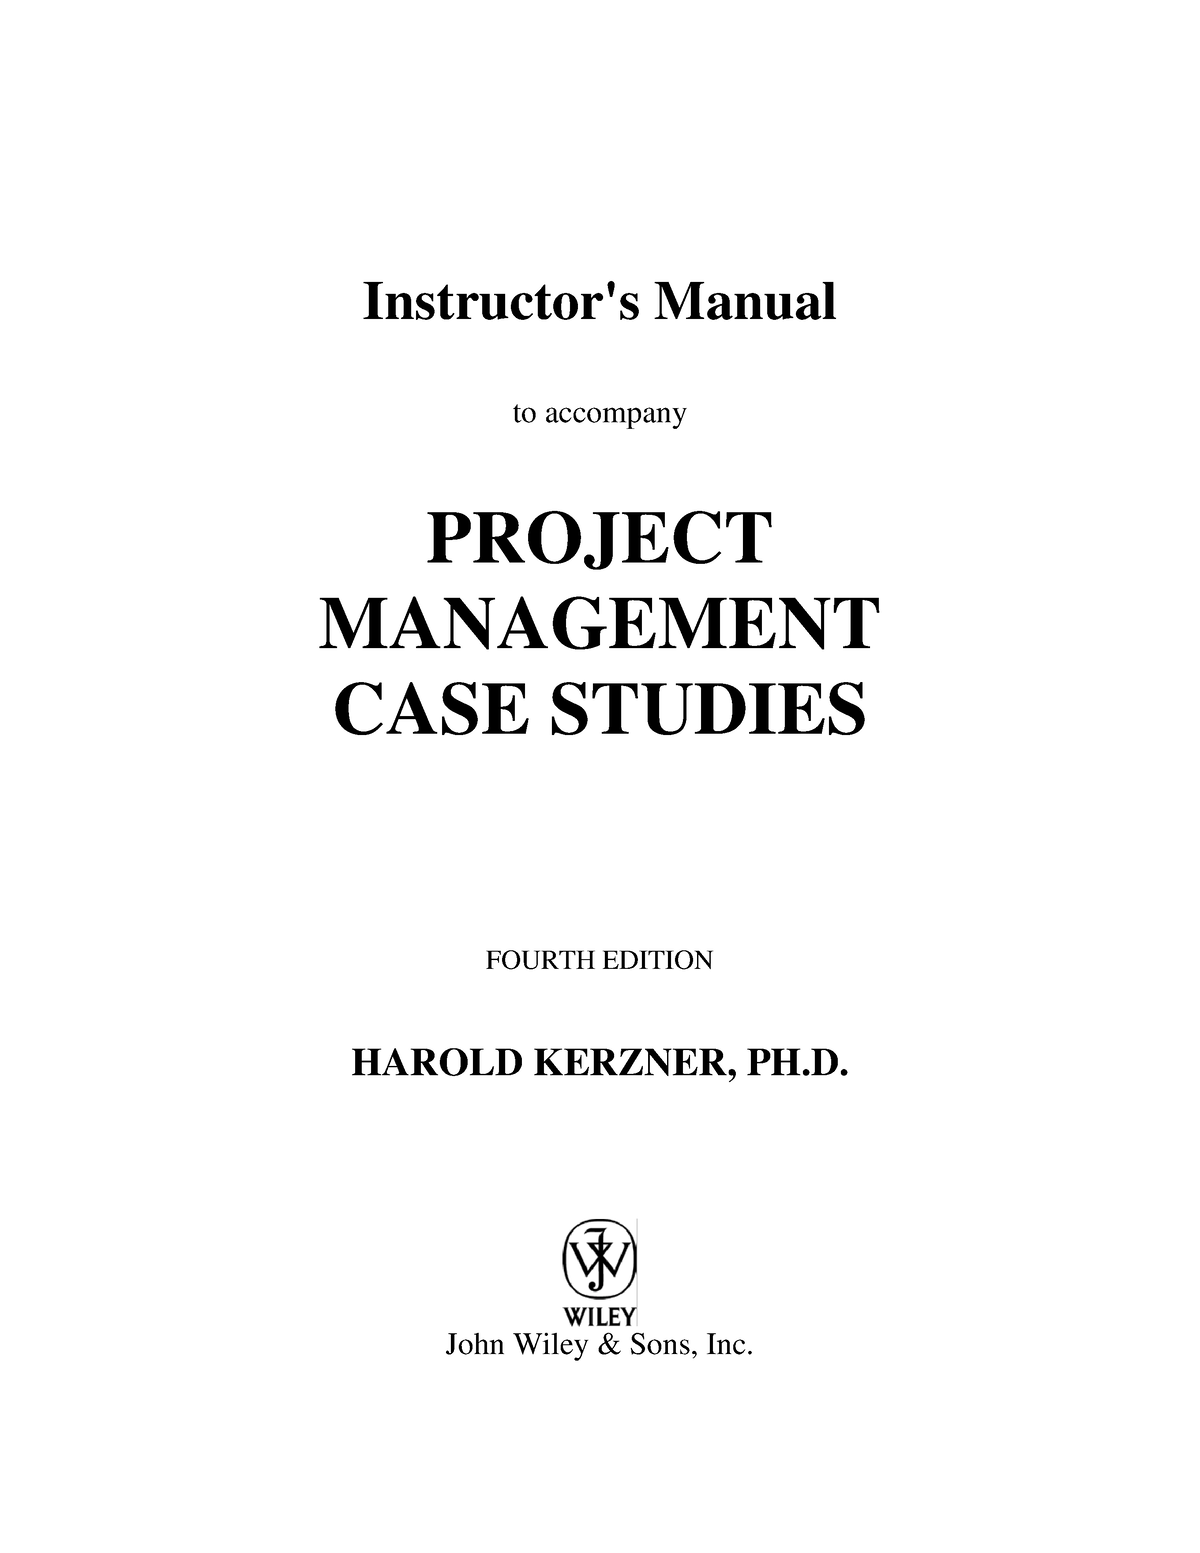 project management case studies 6th edition